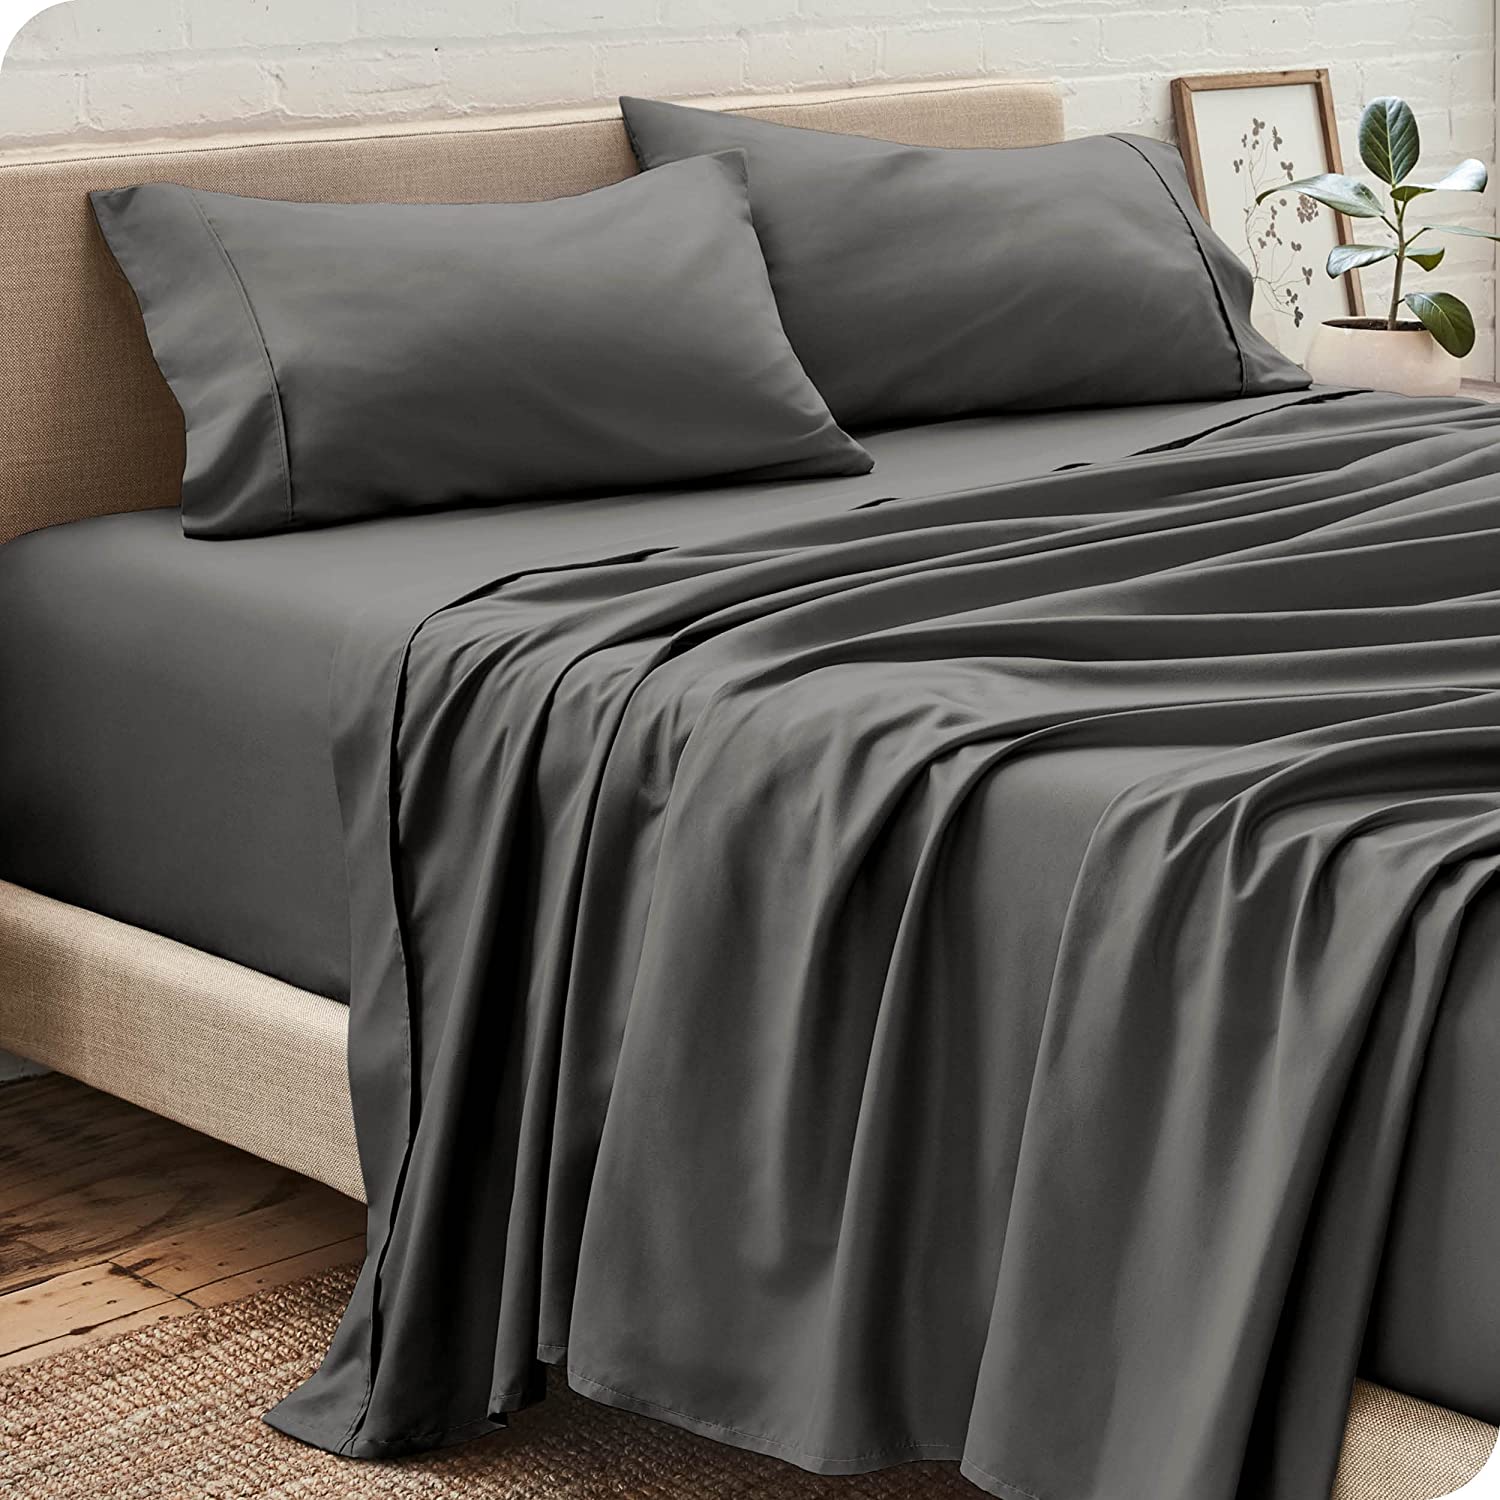 Danjor Linens Queen Size Bed Sheets Set - 1800 Series 6 Piece Bedding Tan